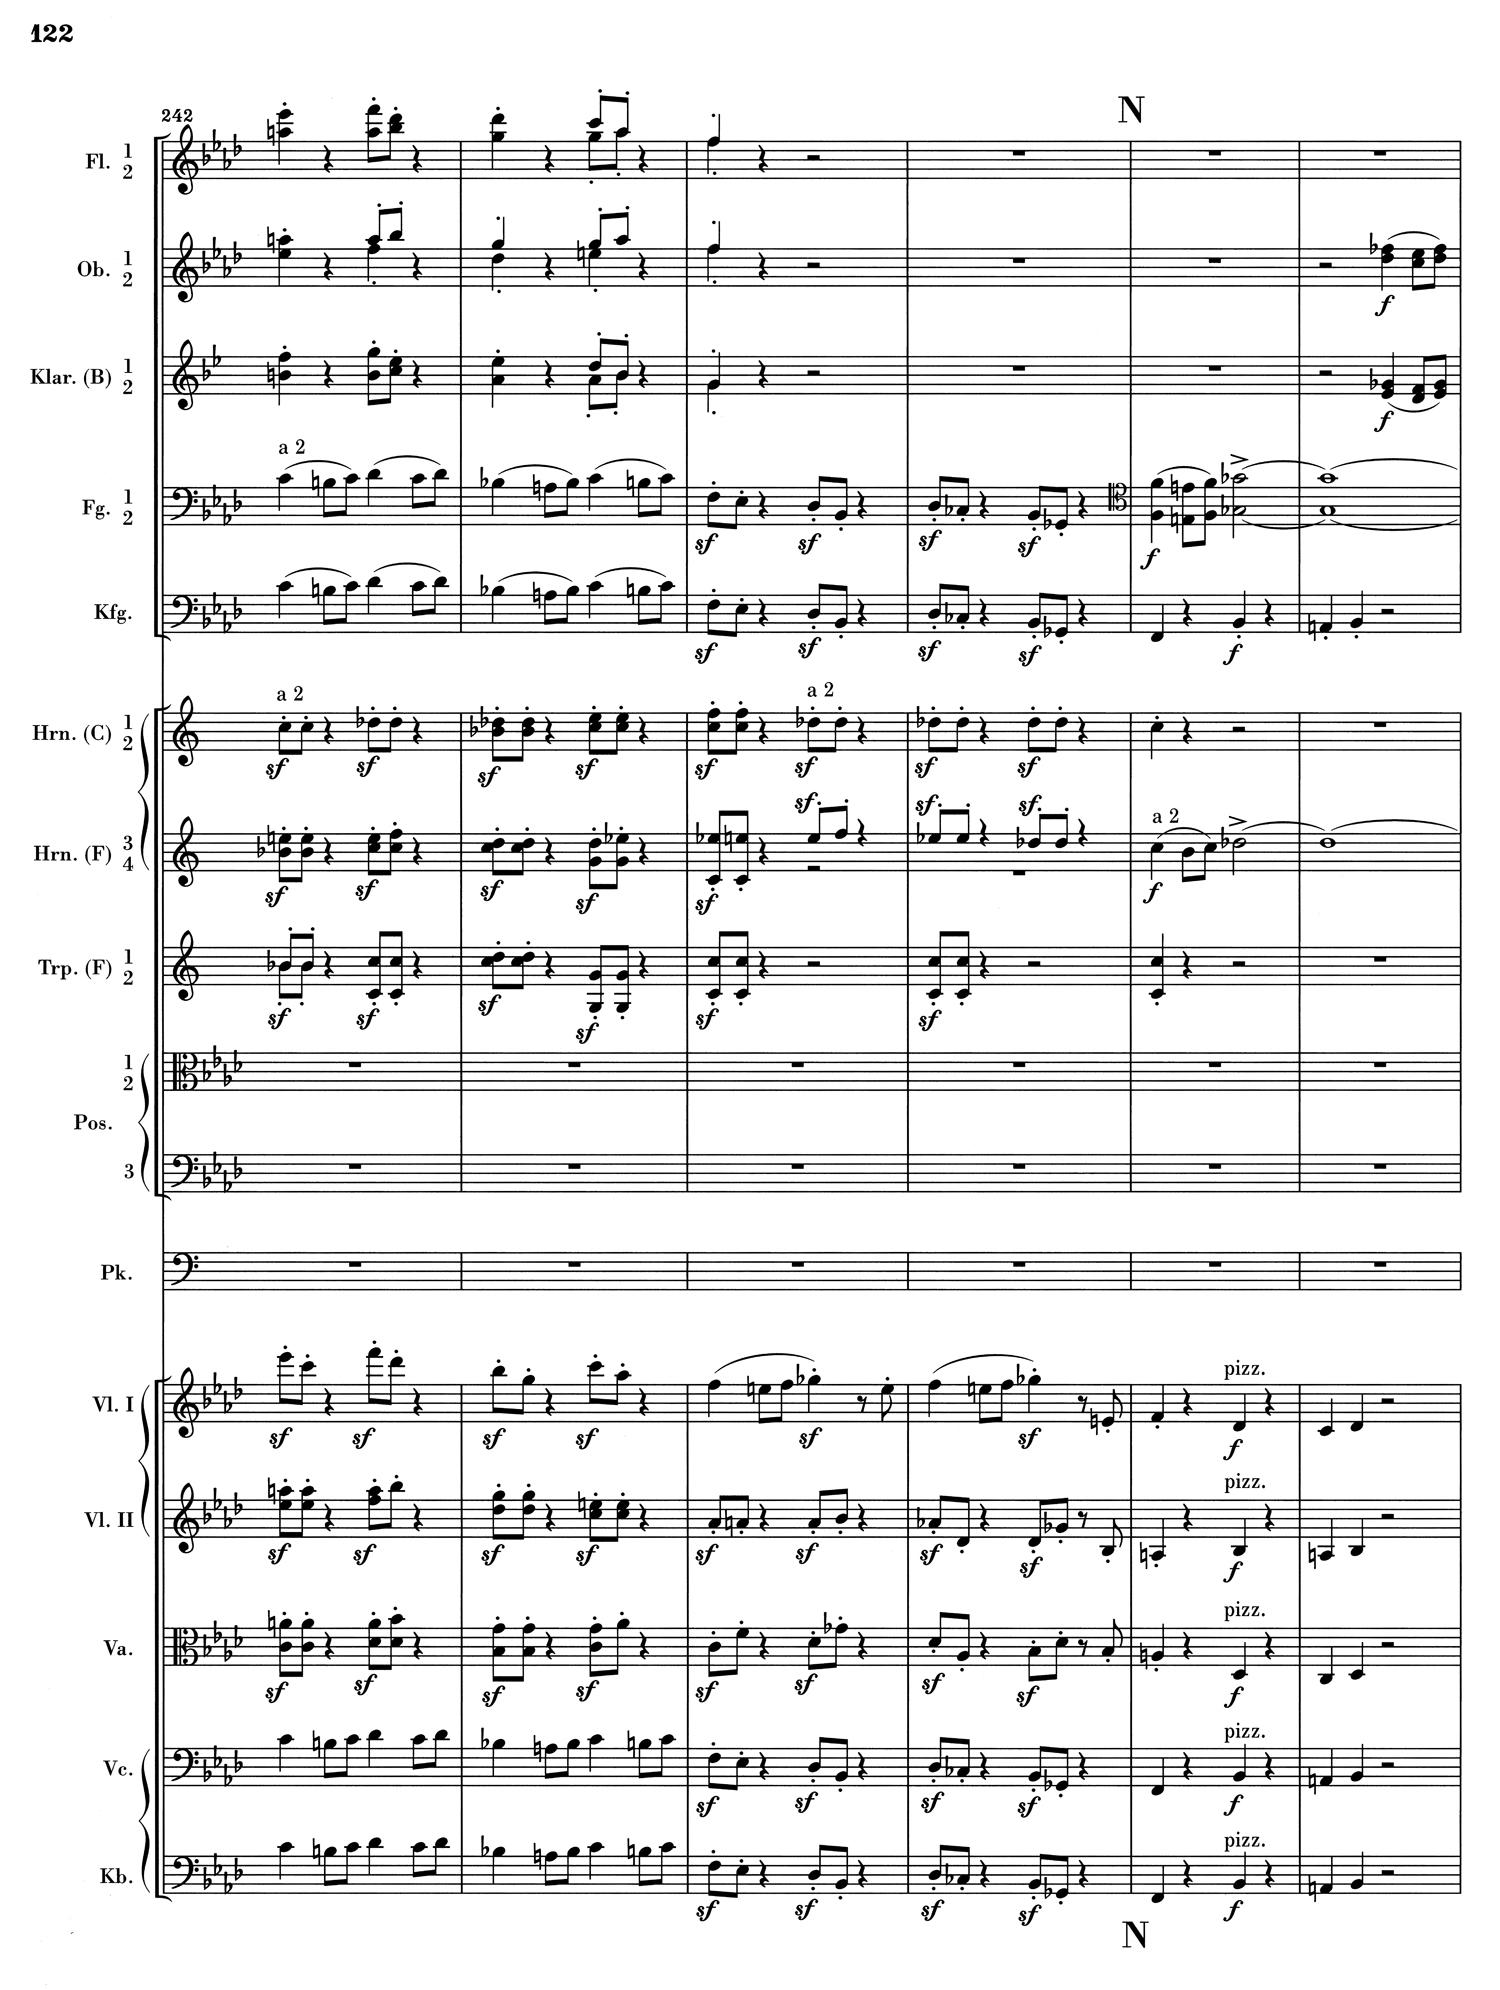 Brahms 3 Score 15.jpg